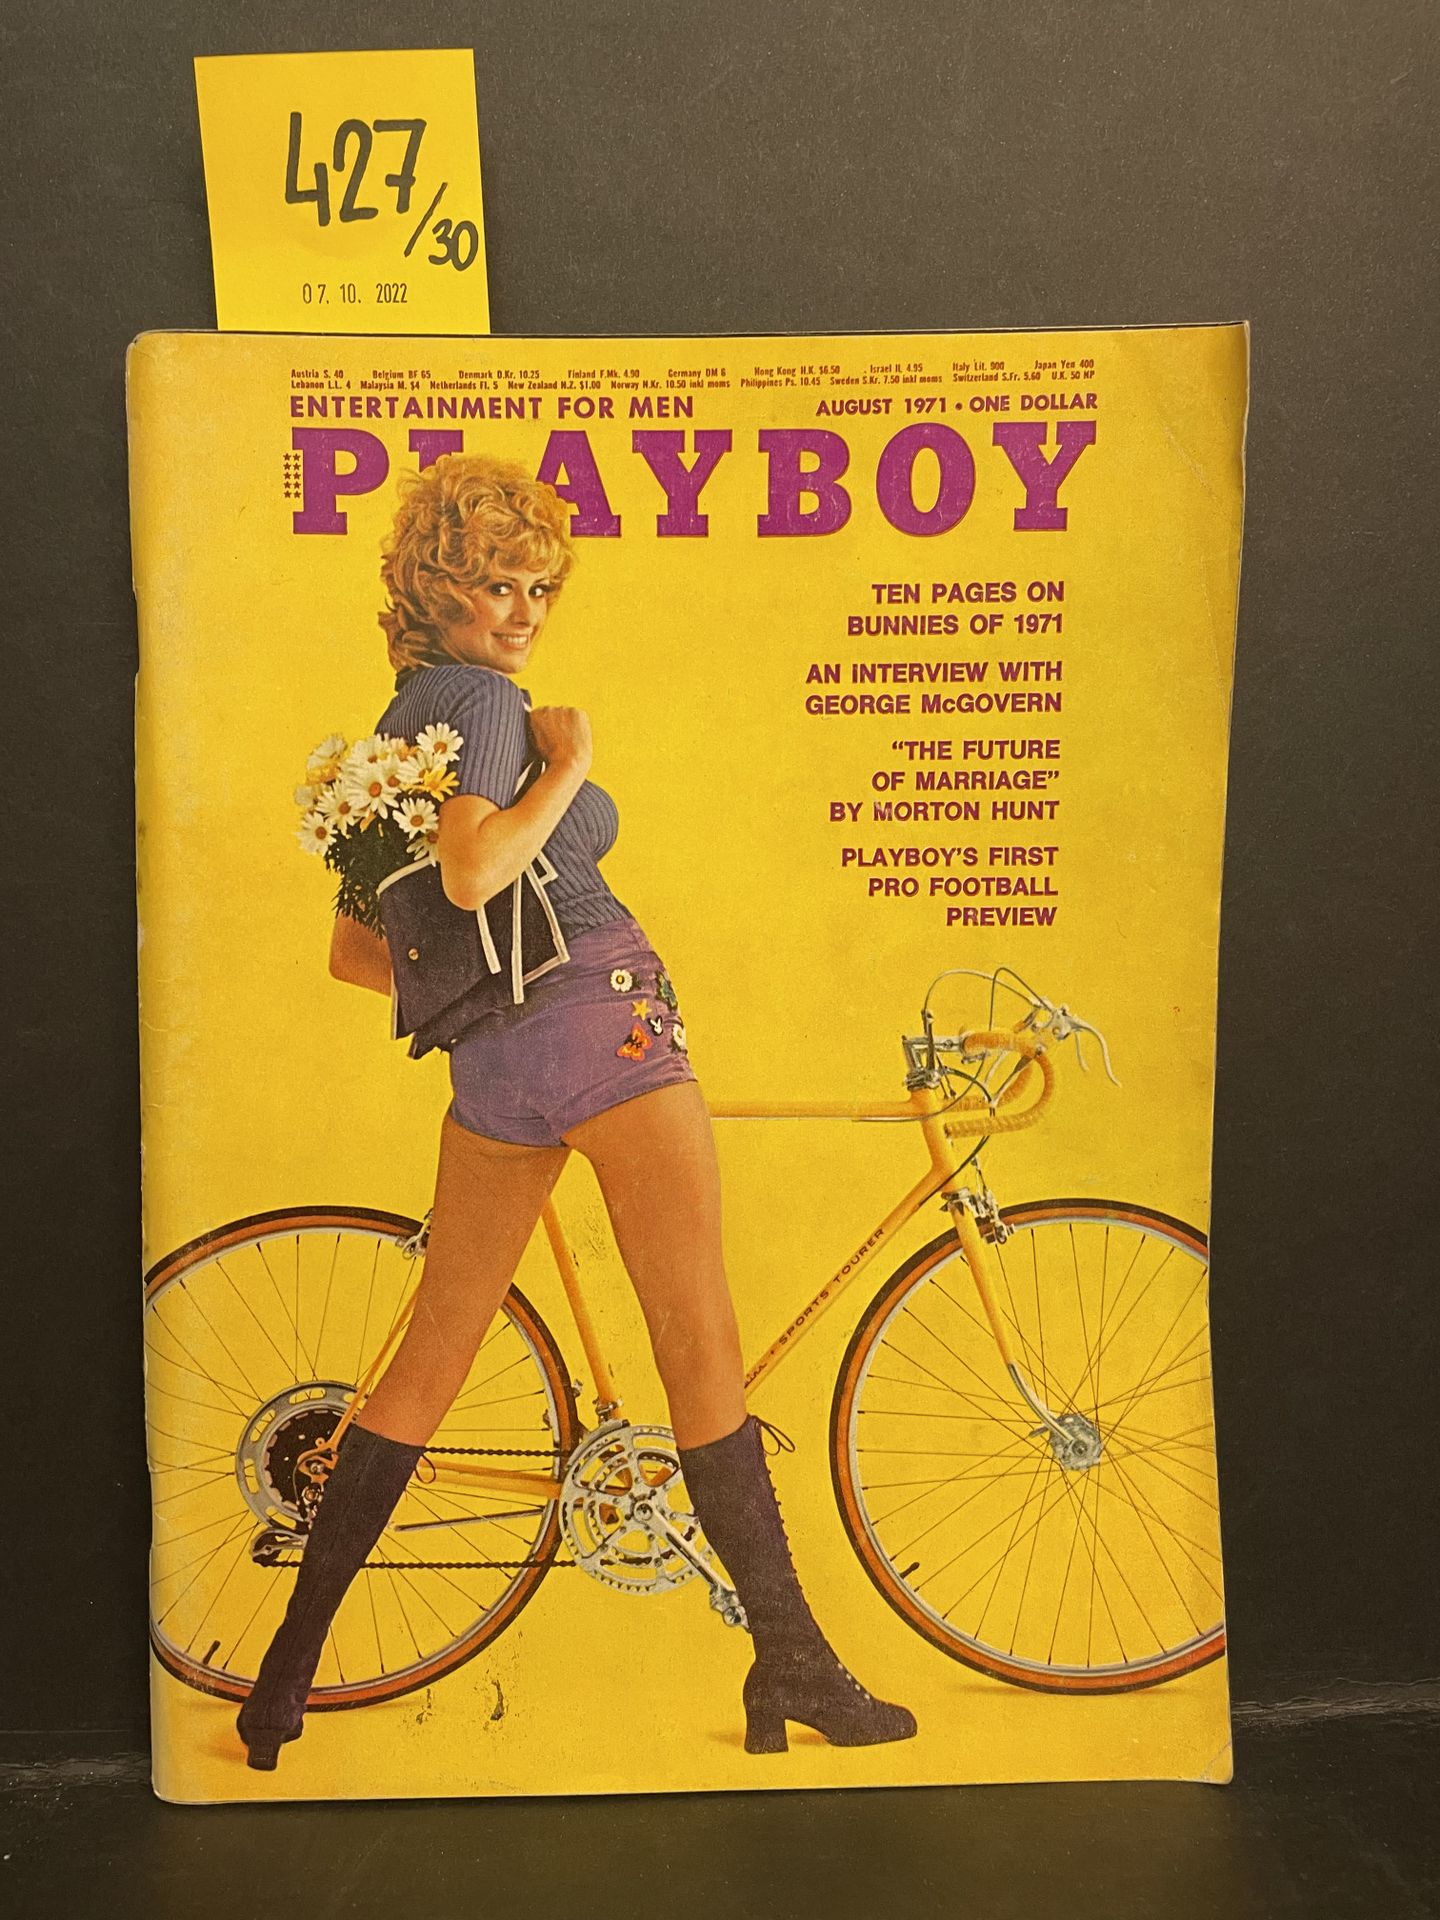 Null "Playboy. Intrattenimento per uomini. Chicago, 1959-1980, 30 volumi. 4°, sp&hellip;